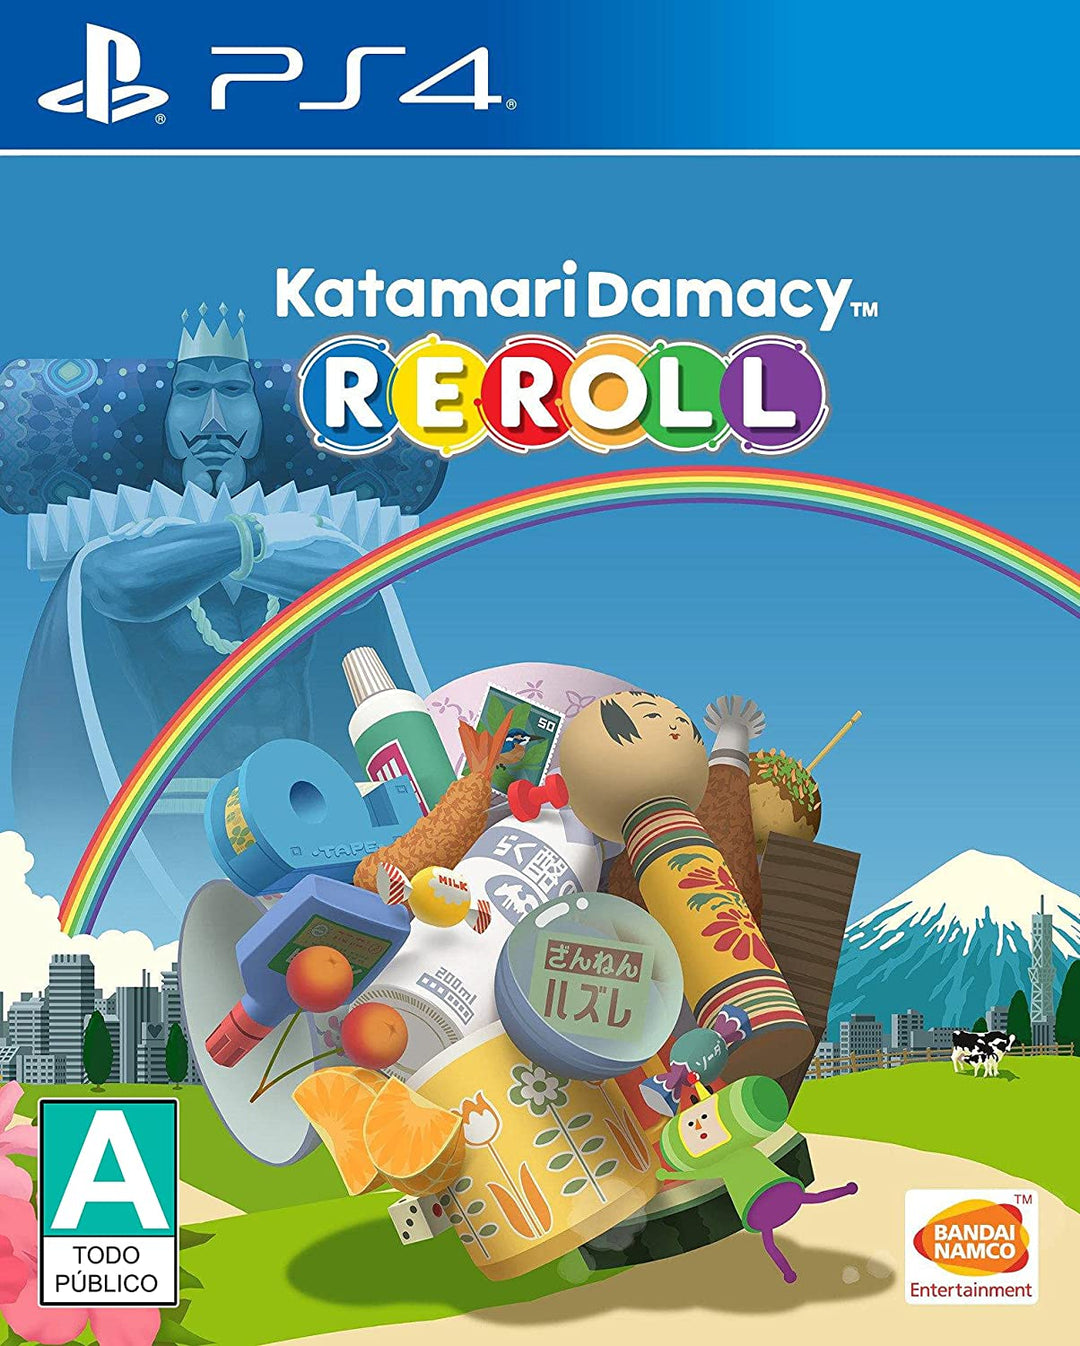 Katamari Damacy REROLL für PlayStation 4